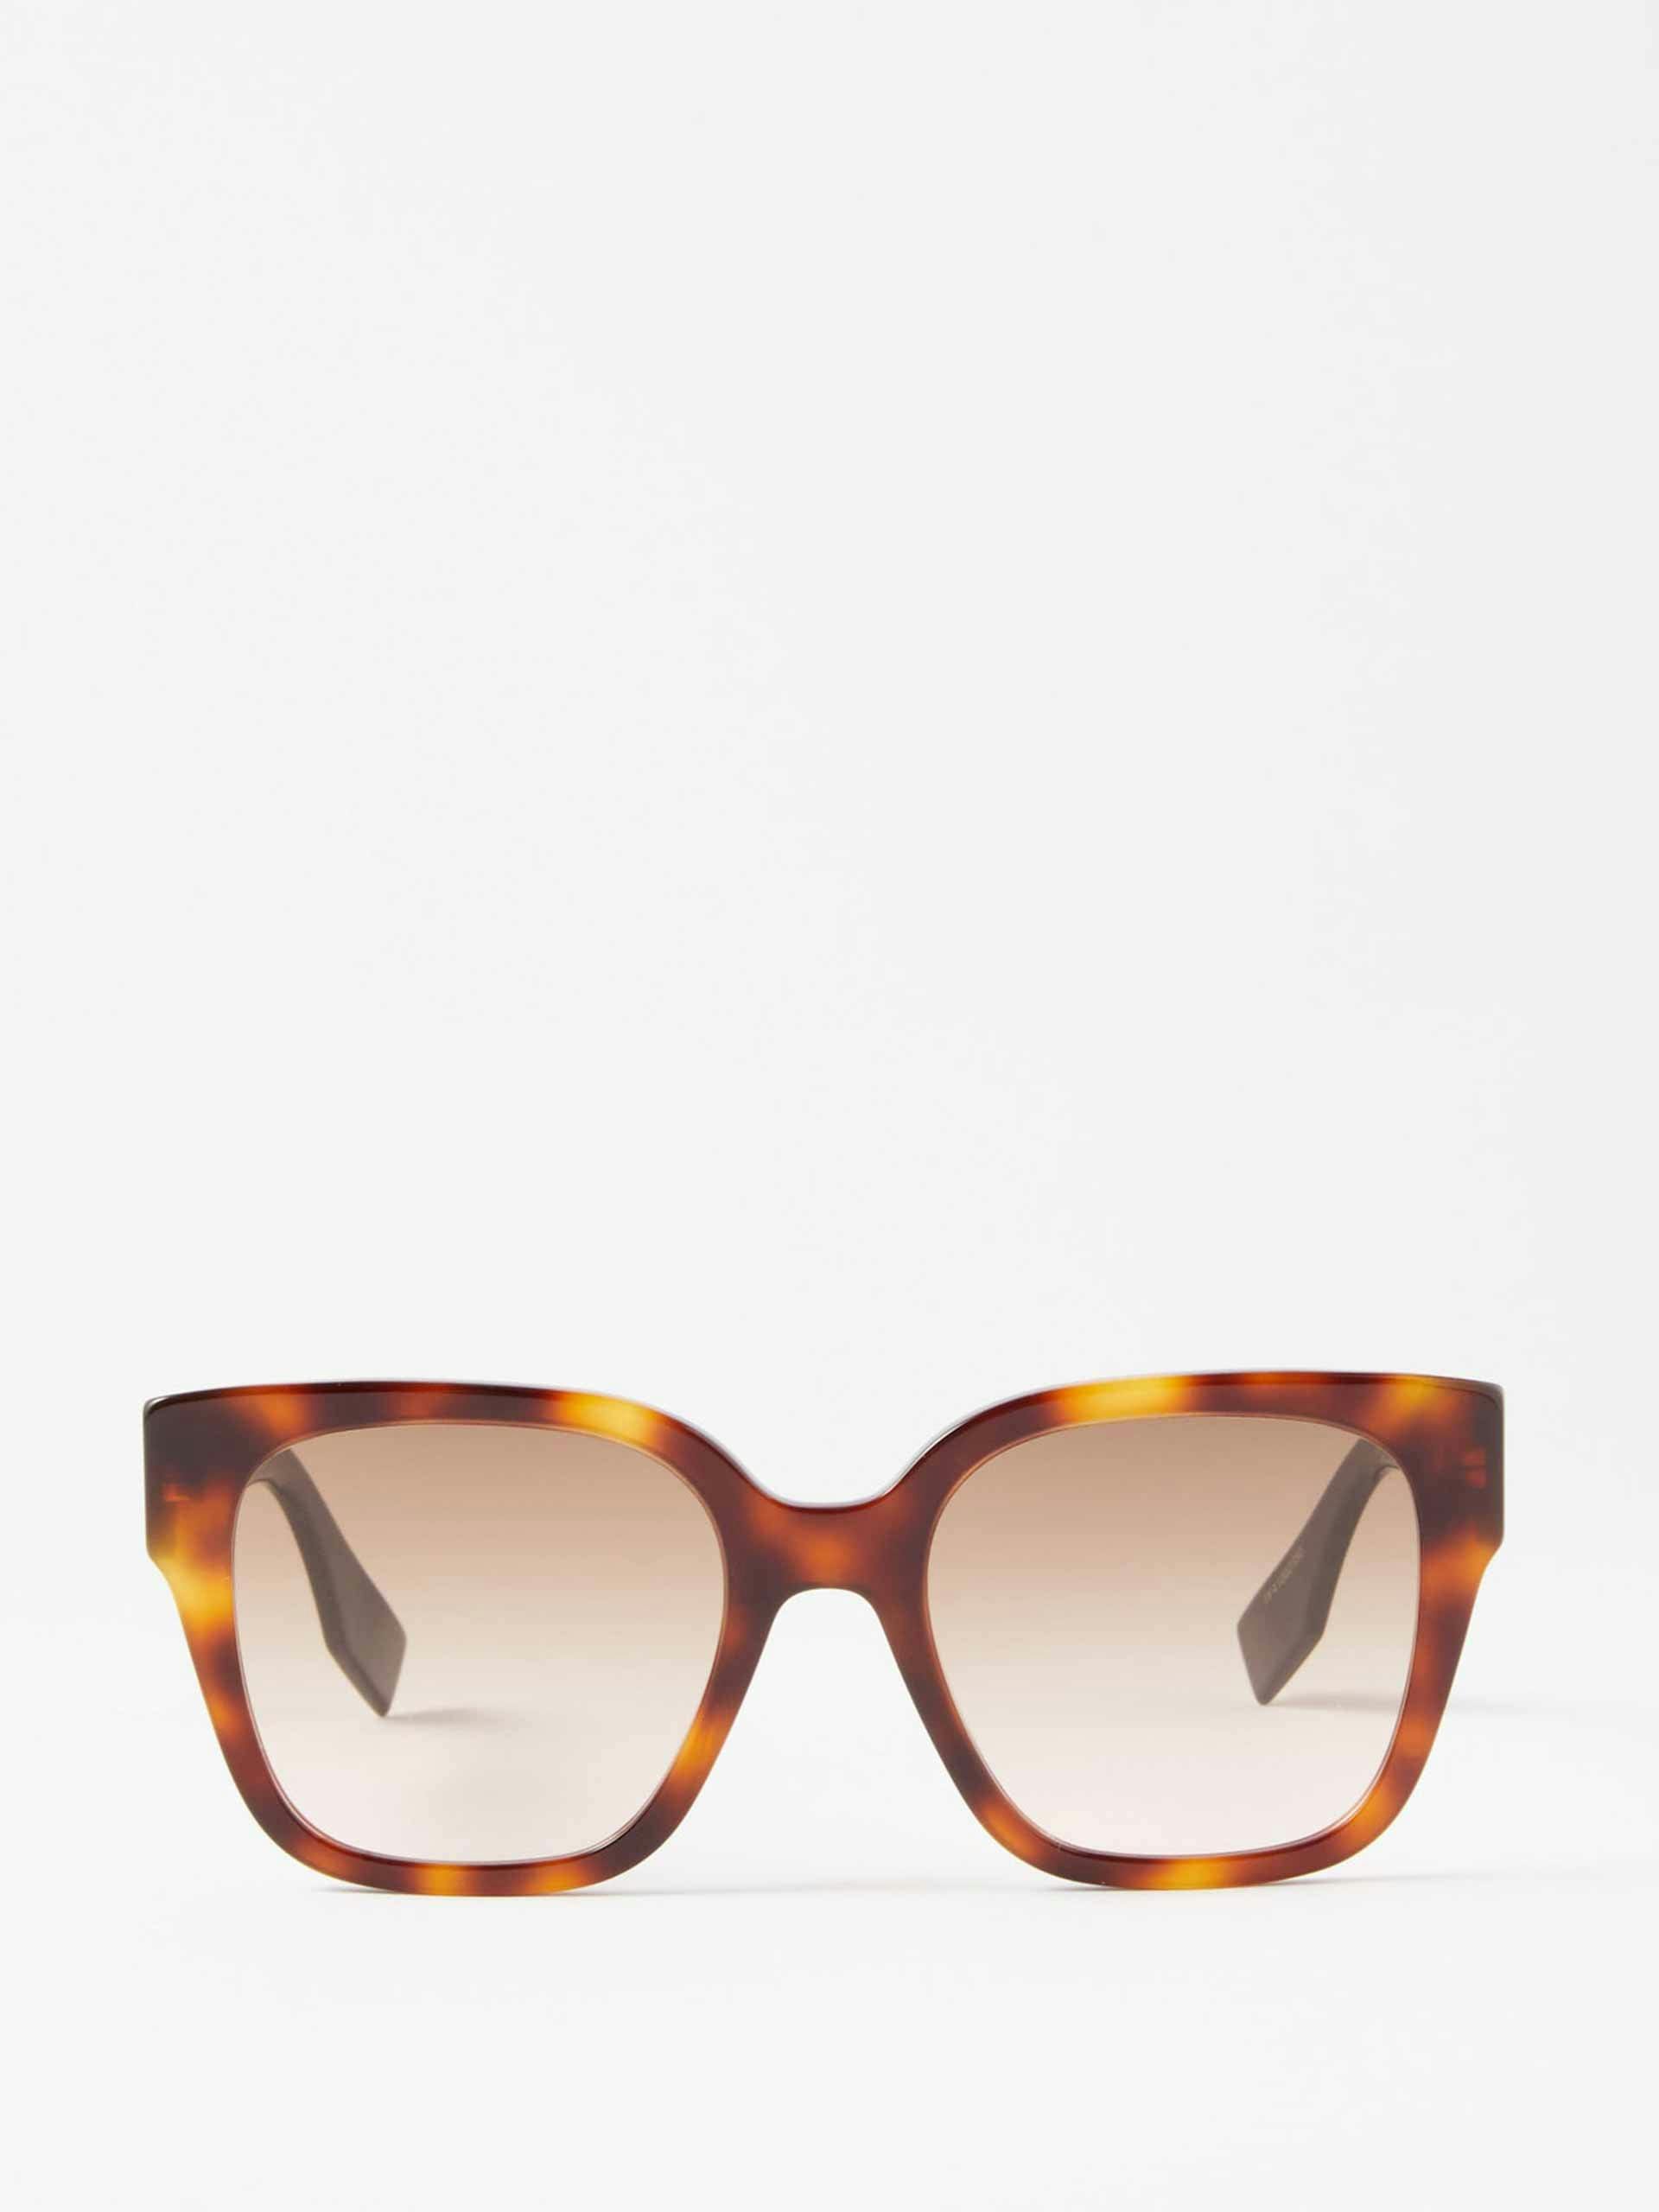 O’Lock oversized square acetate sunglasses